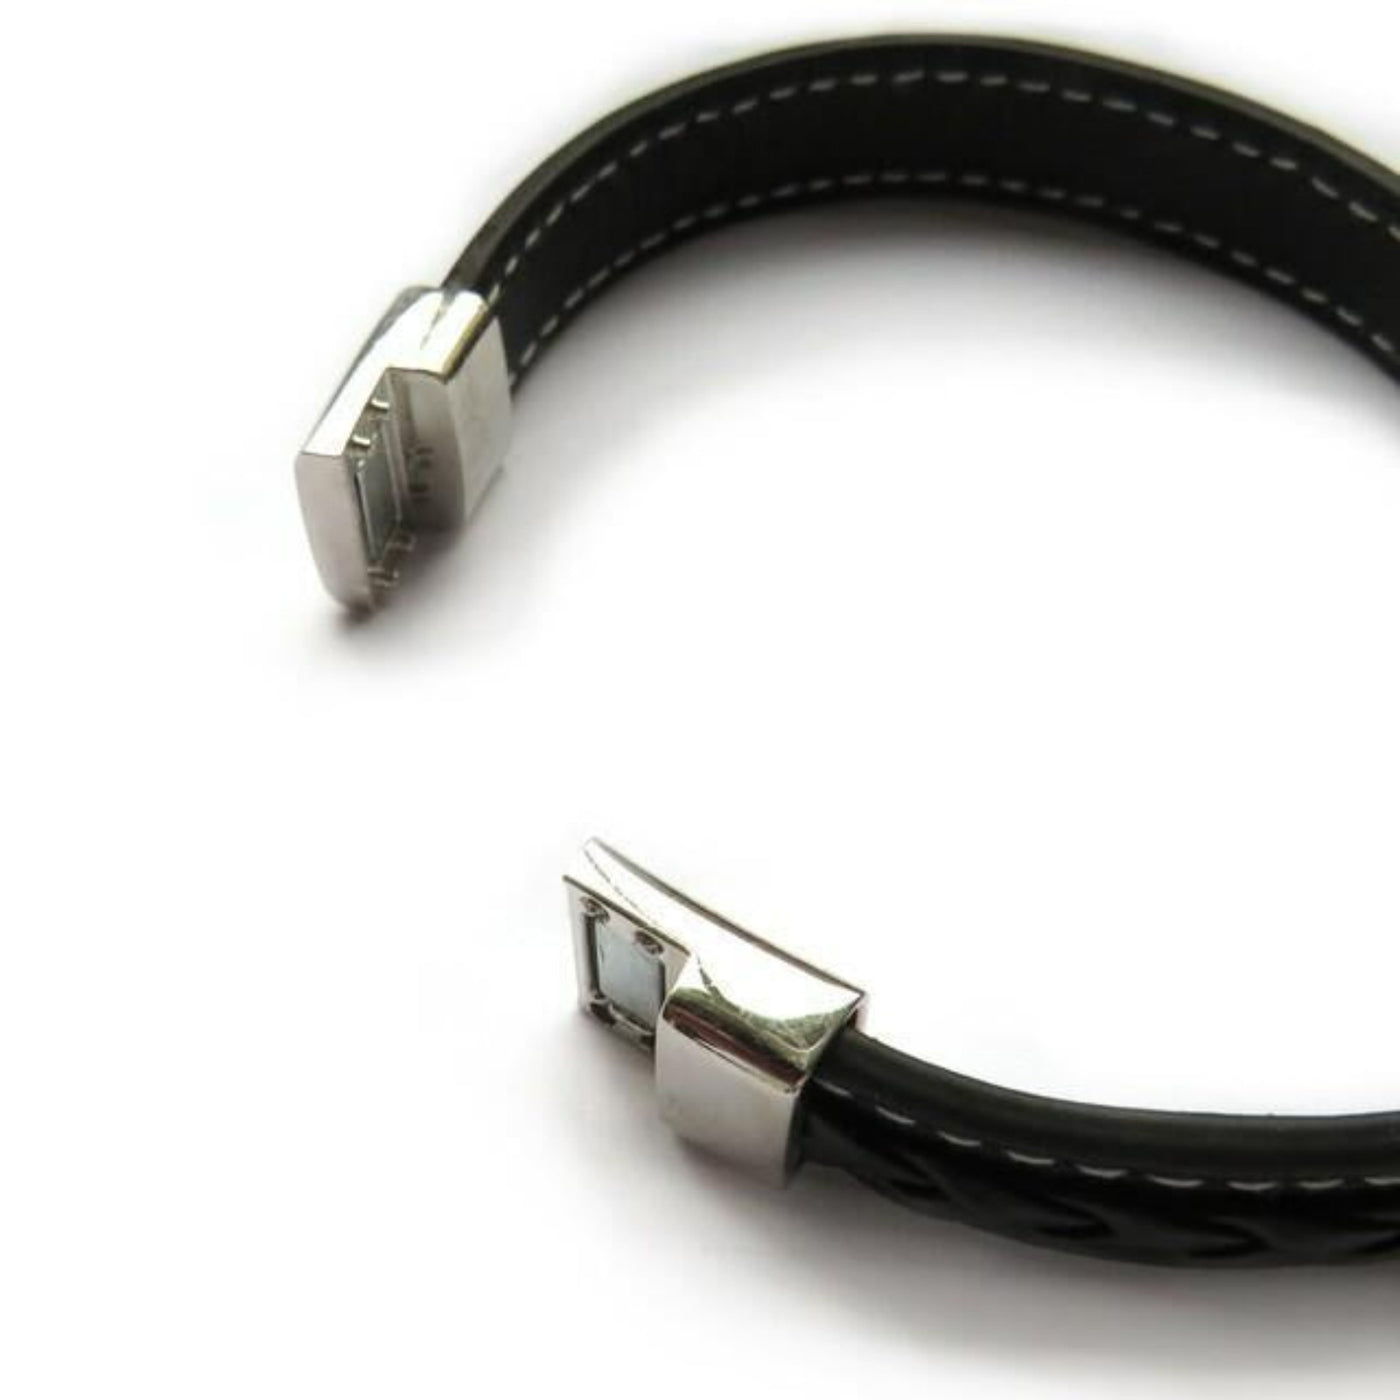 Men's Black Faux Leather Magnetic Plated Bracelet.